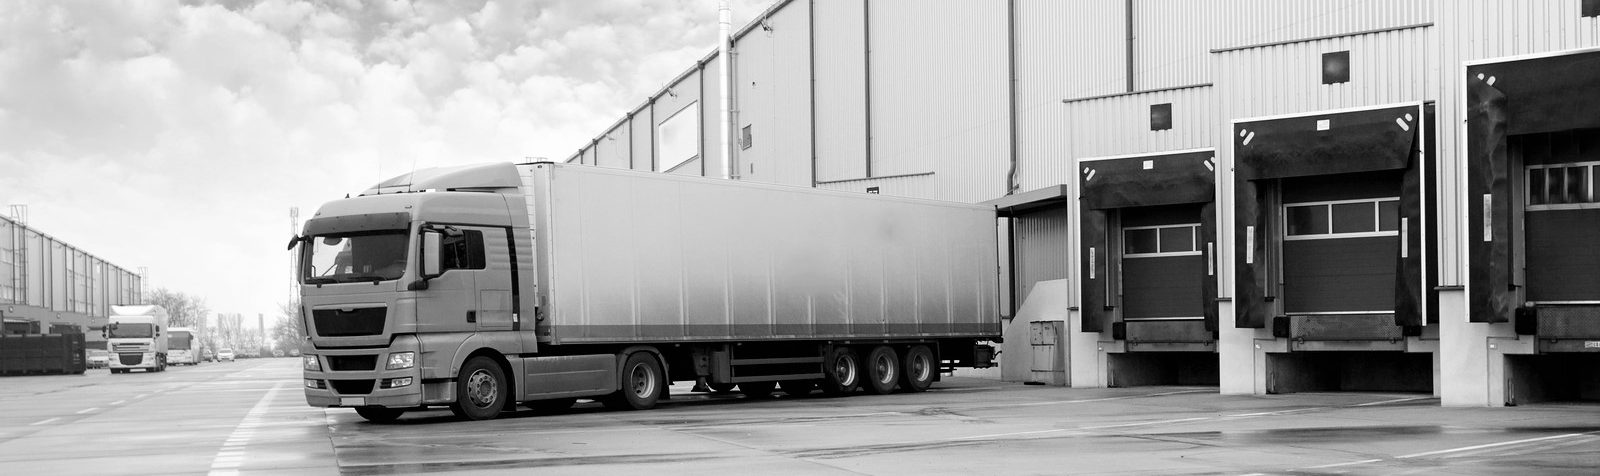 Unloading-Cargo-Truck-At-Warehouse-bw-1-e1473258710495